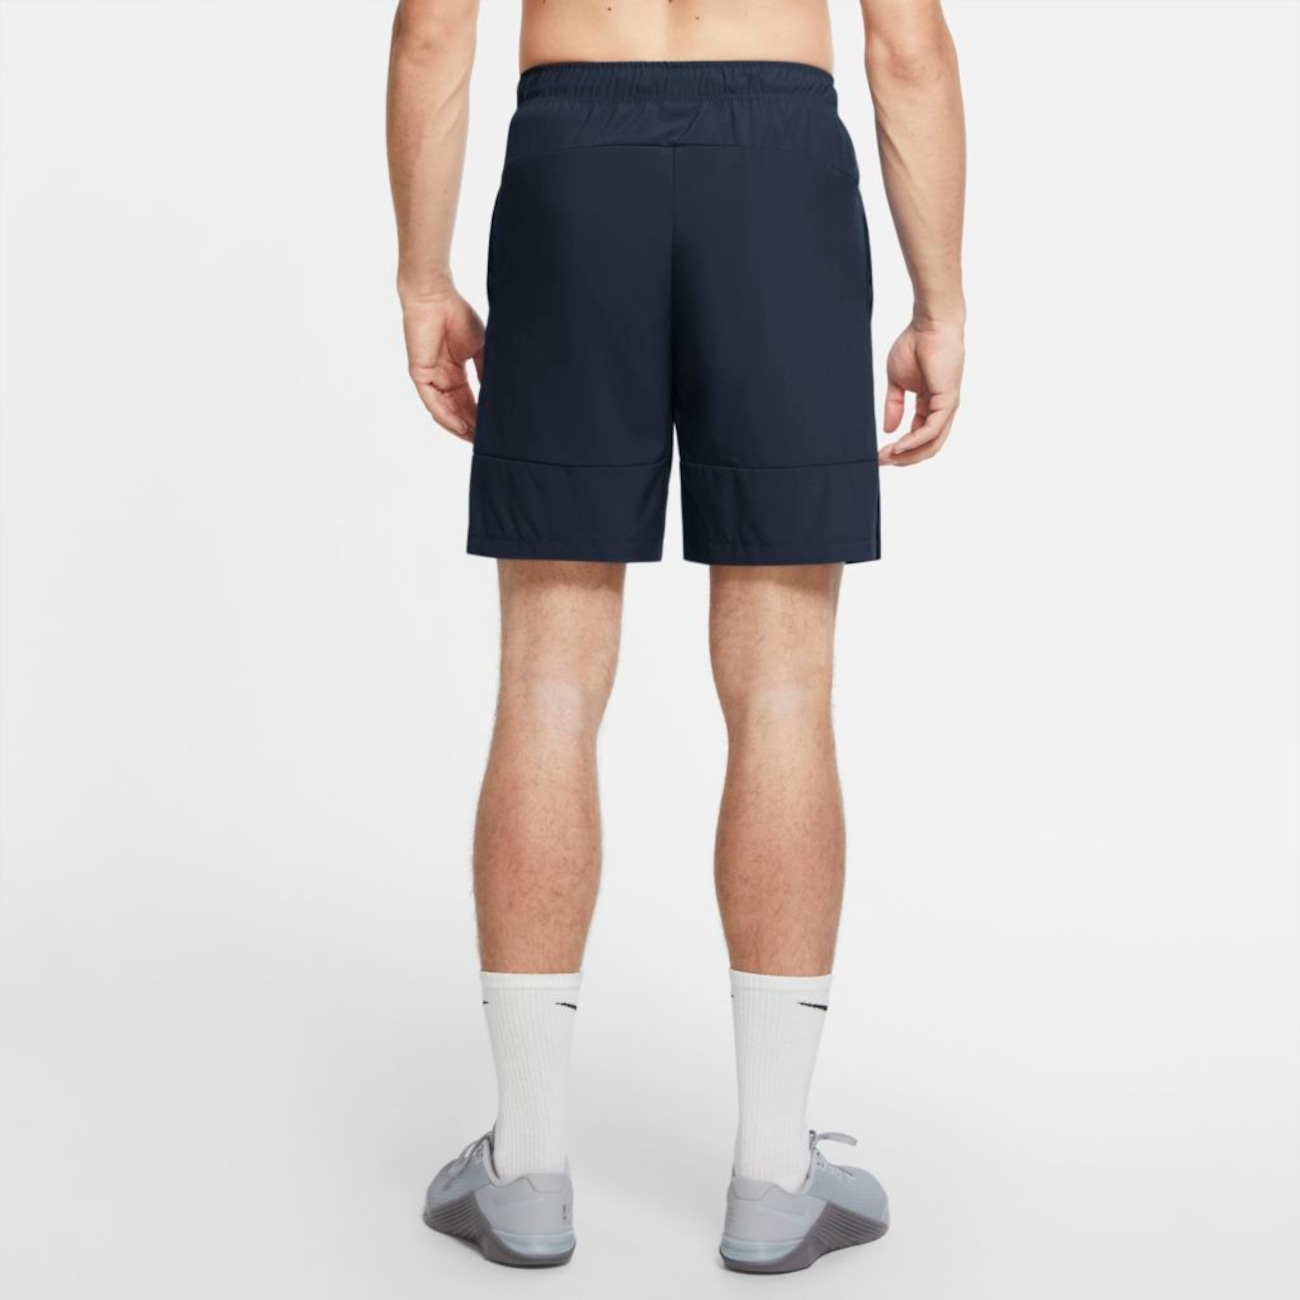 Shorts Nike Flex Masculino - Foto 2